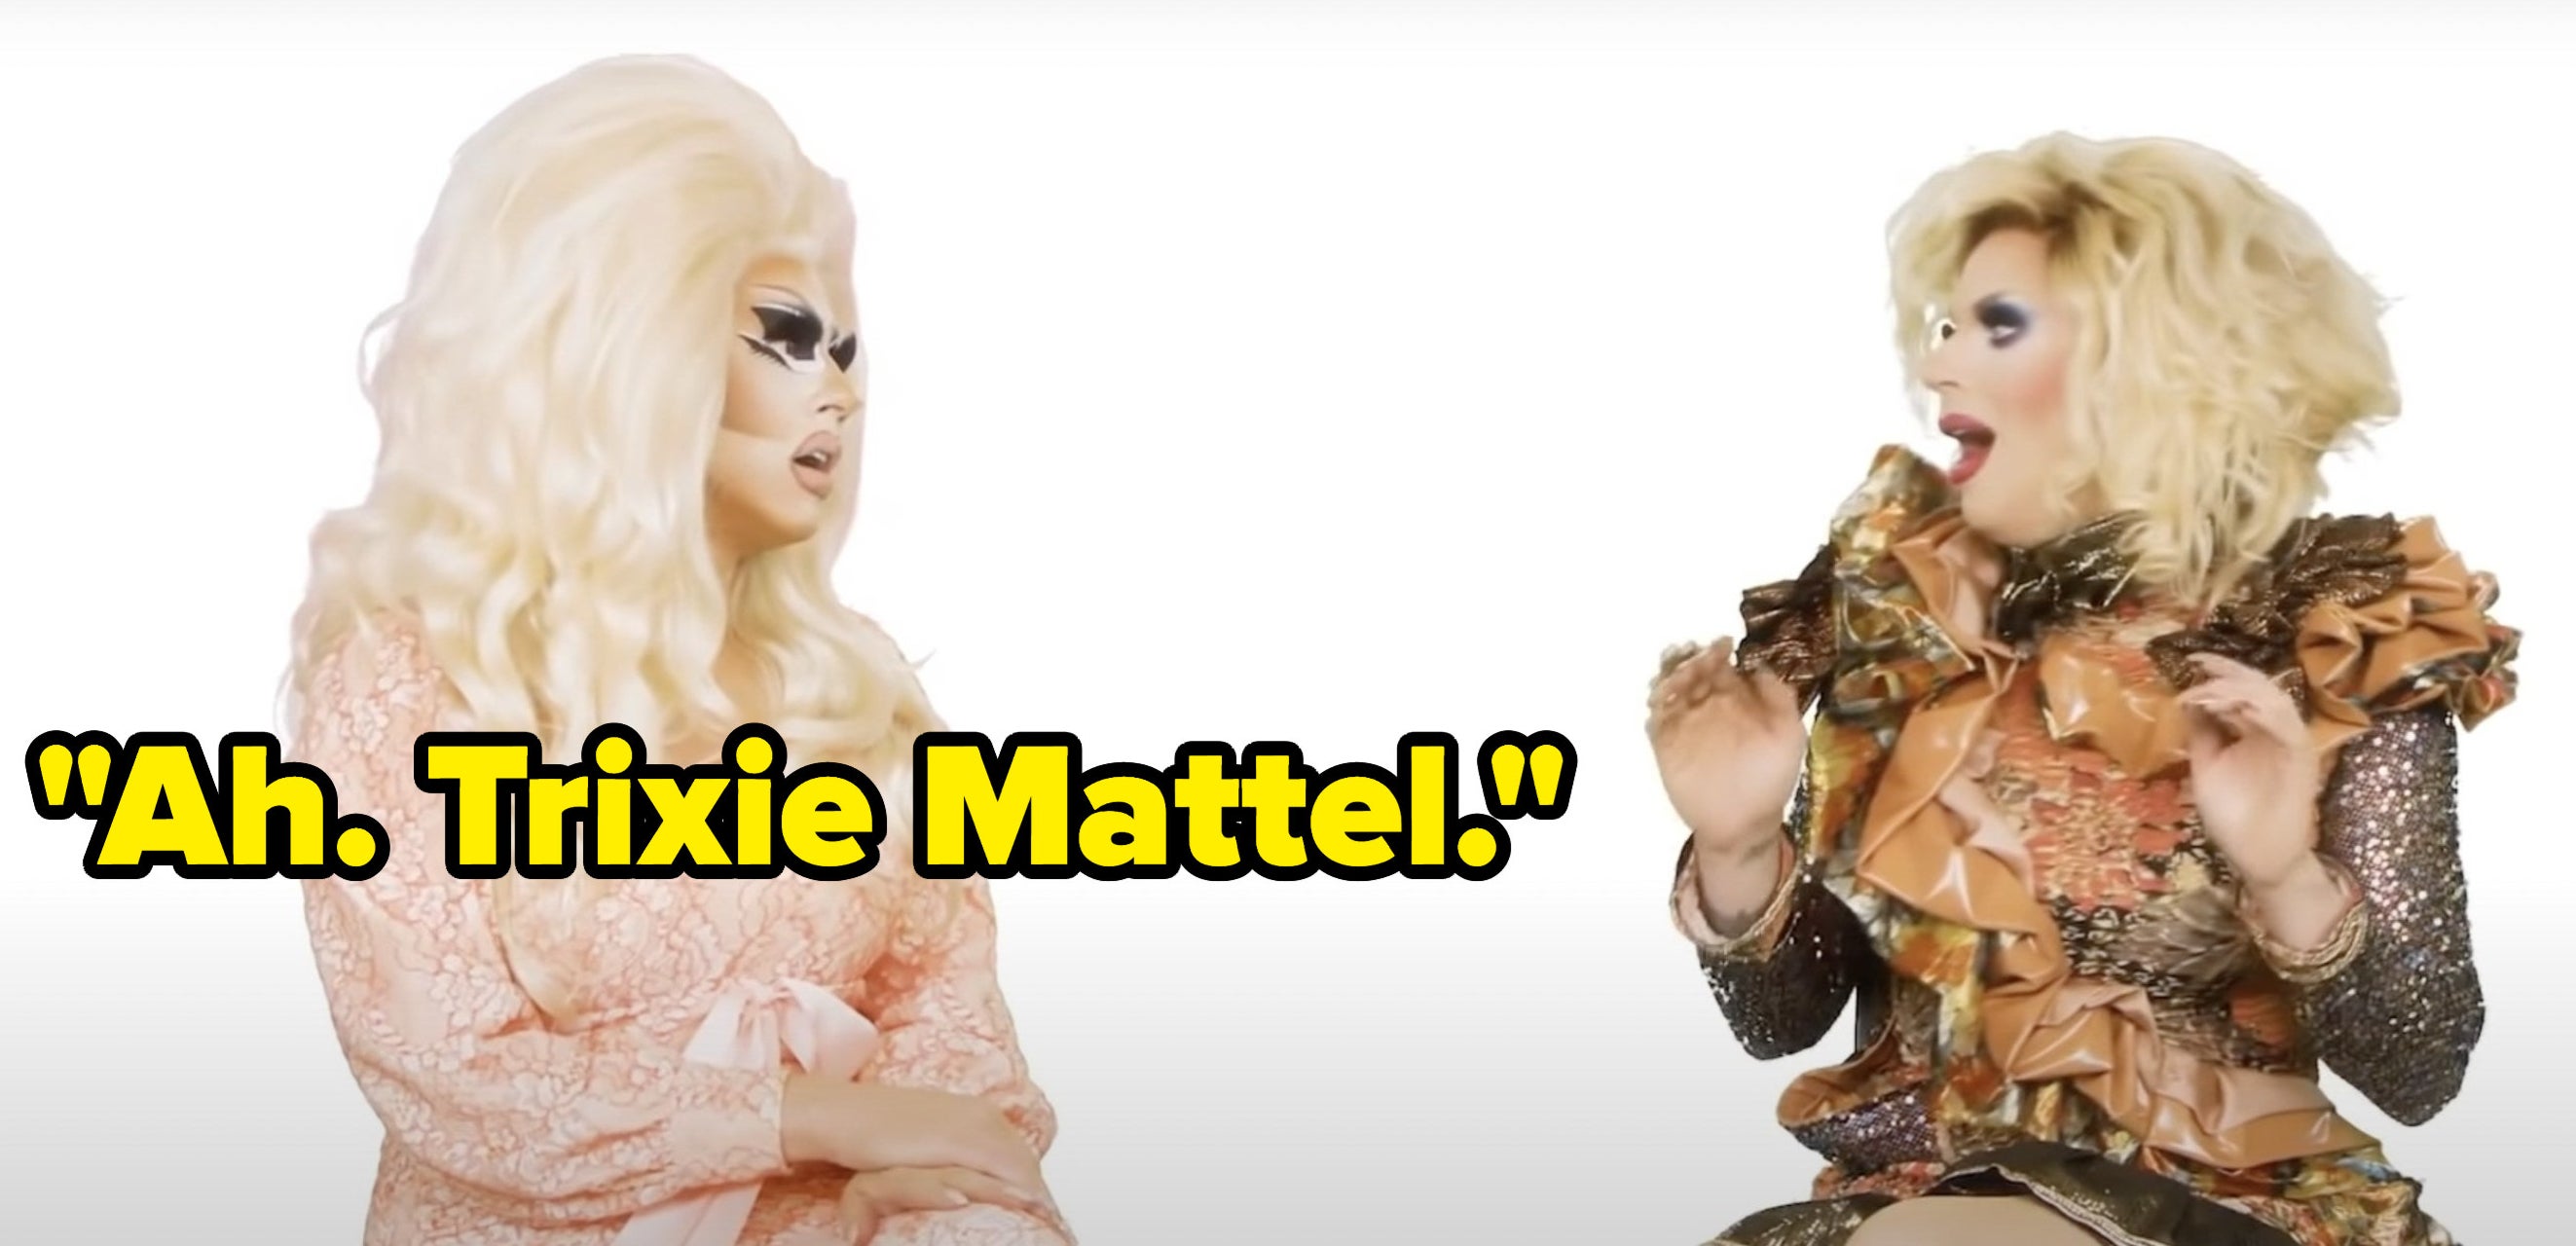 Trixie says, Ah, Trixie Mattel